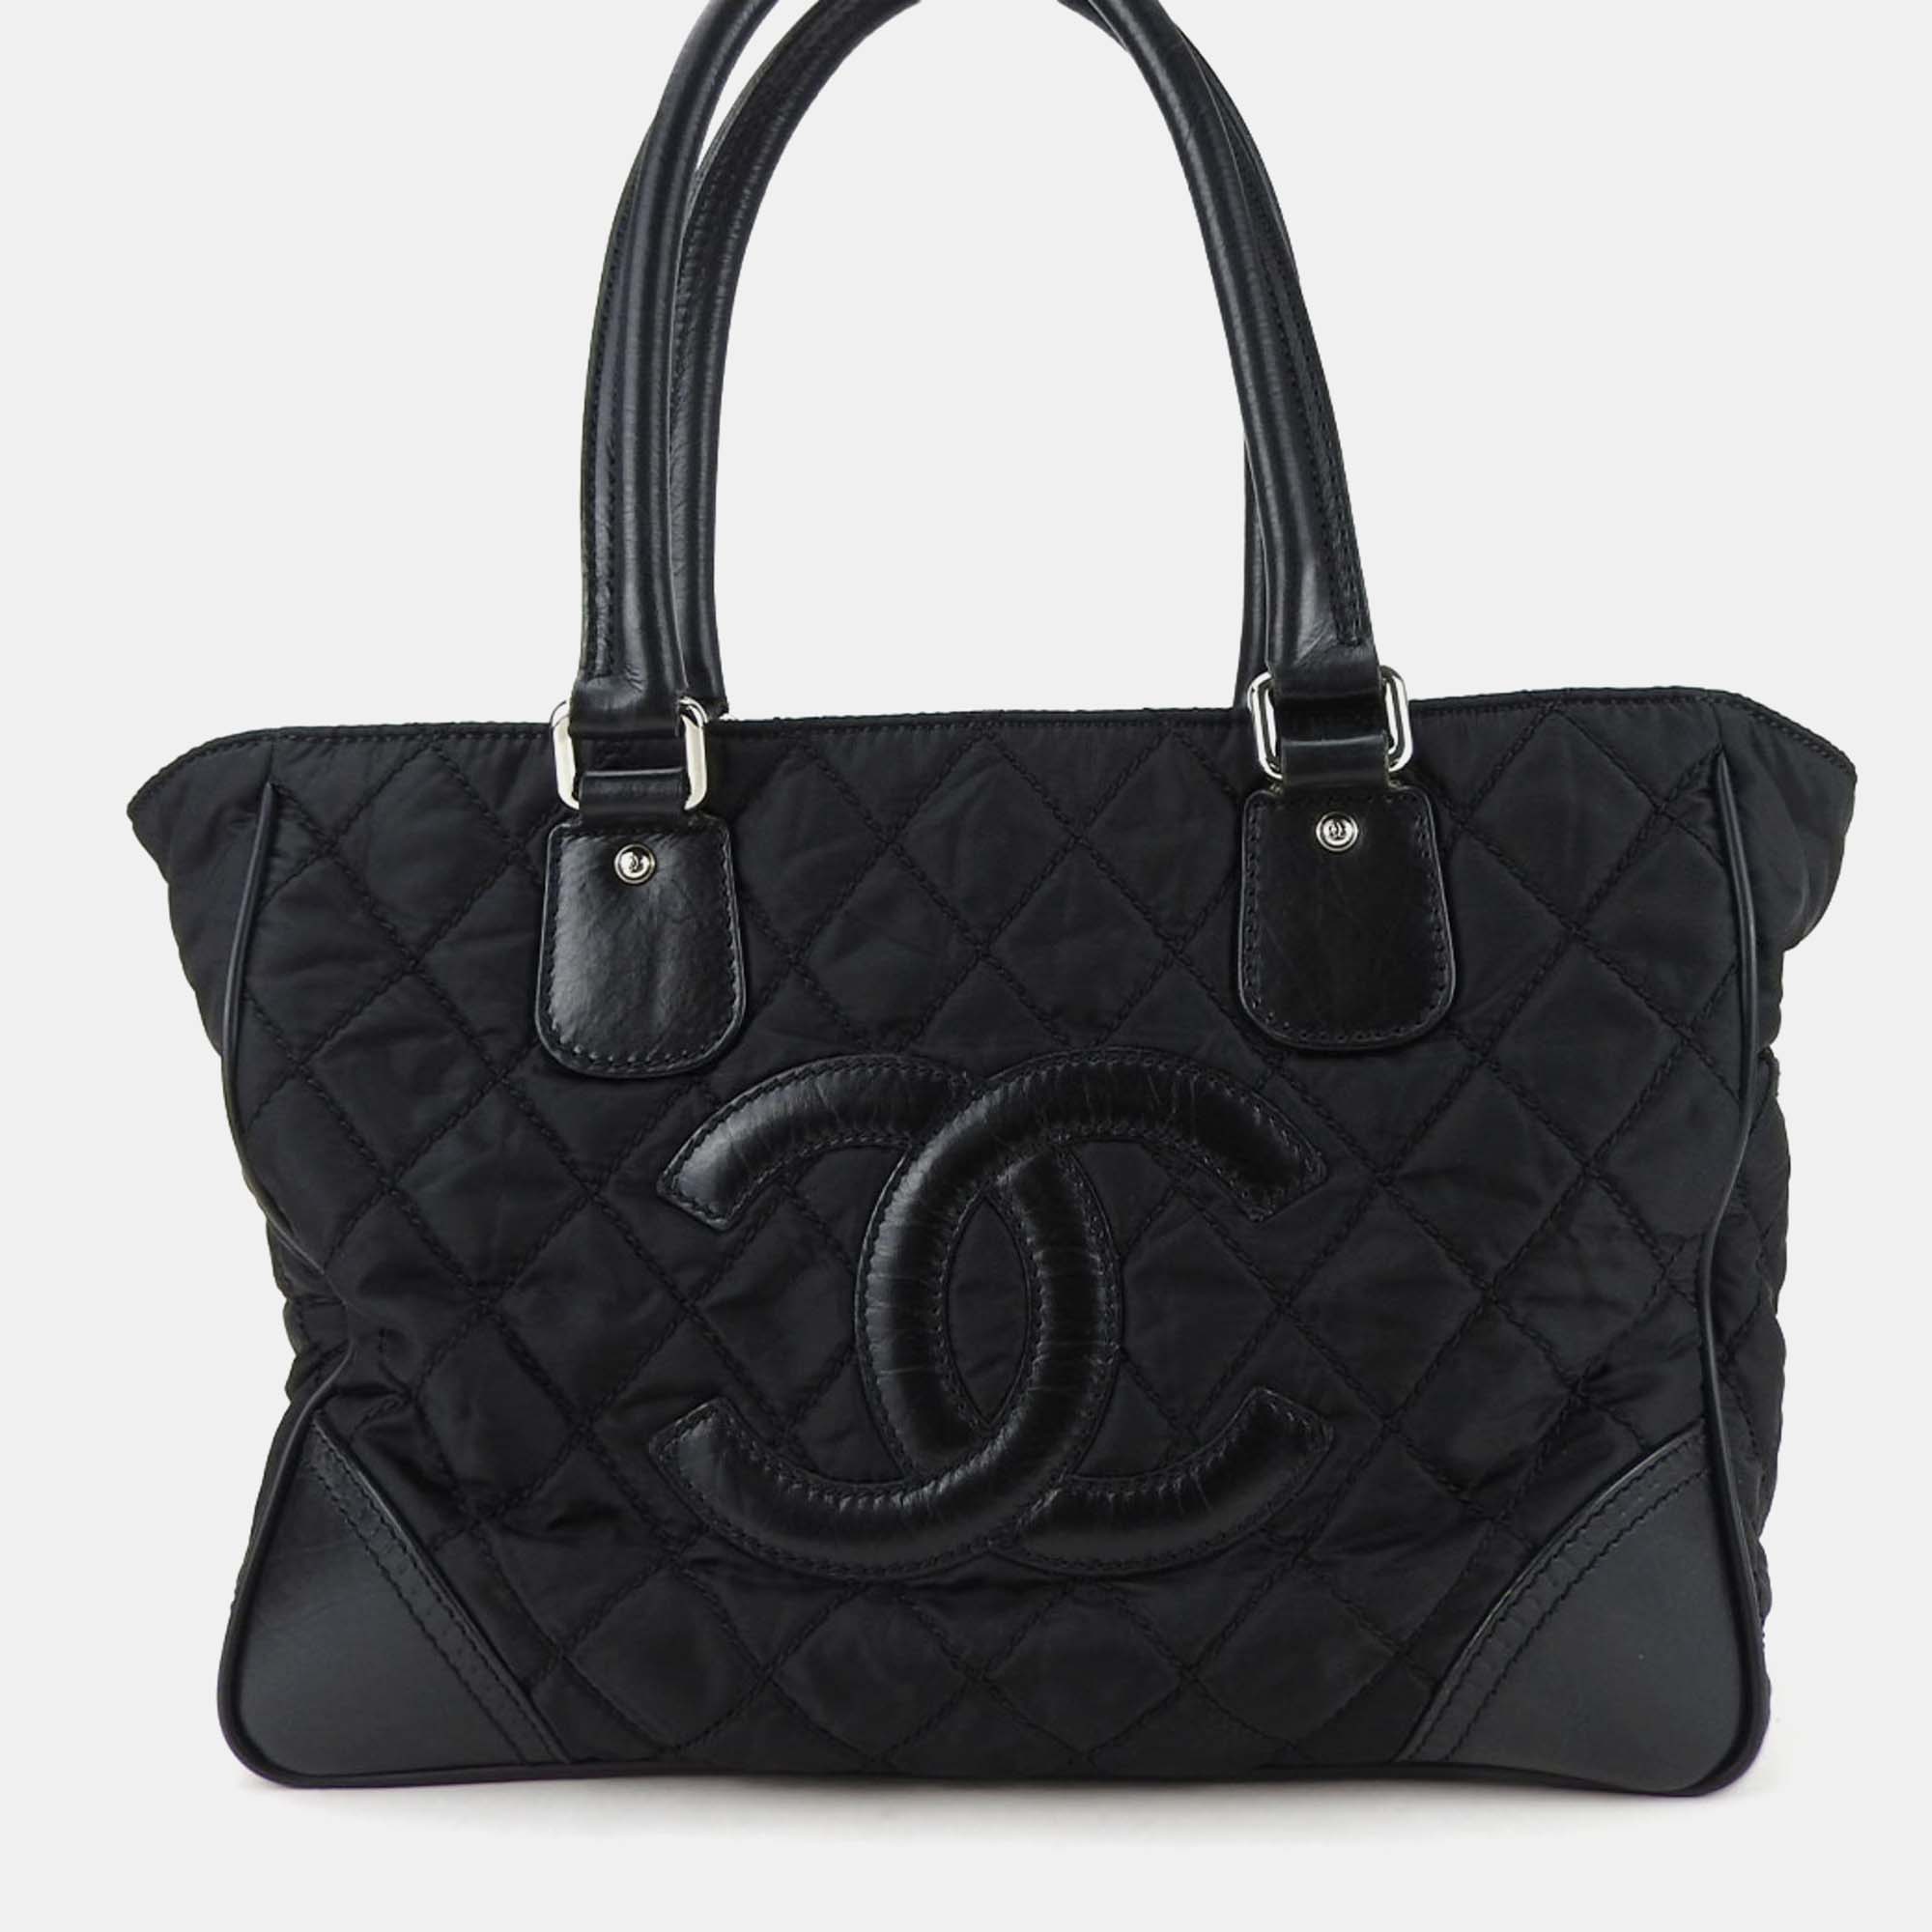 

Chanel Black Nylon/Leather Paris New York Timeless Tote Bag